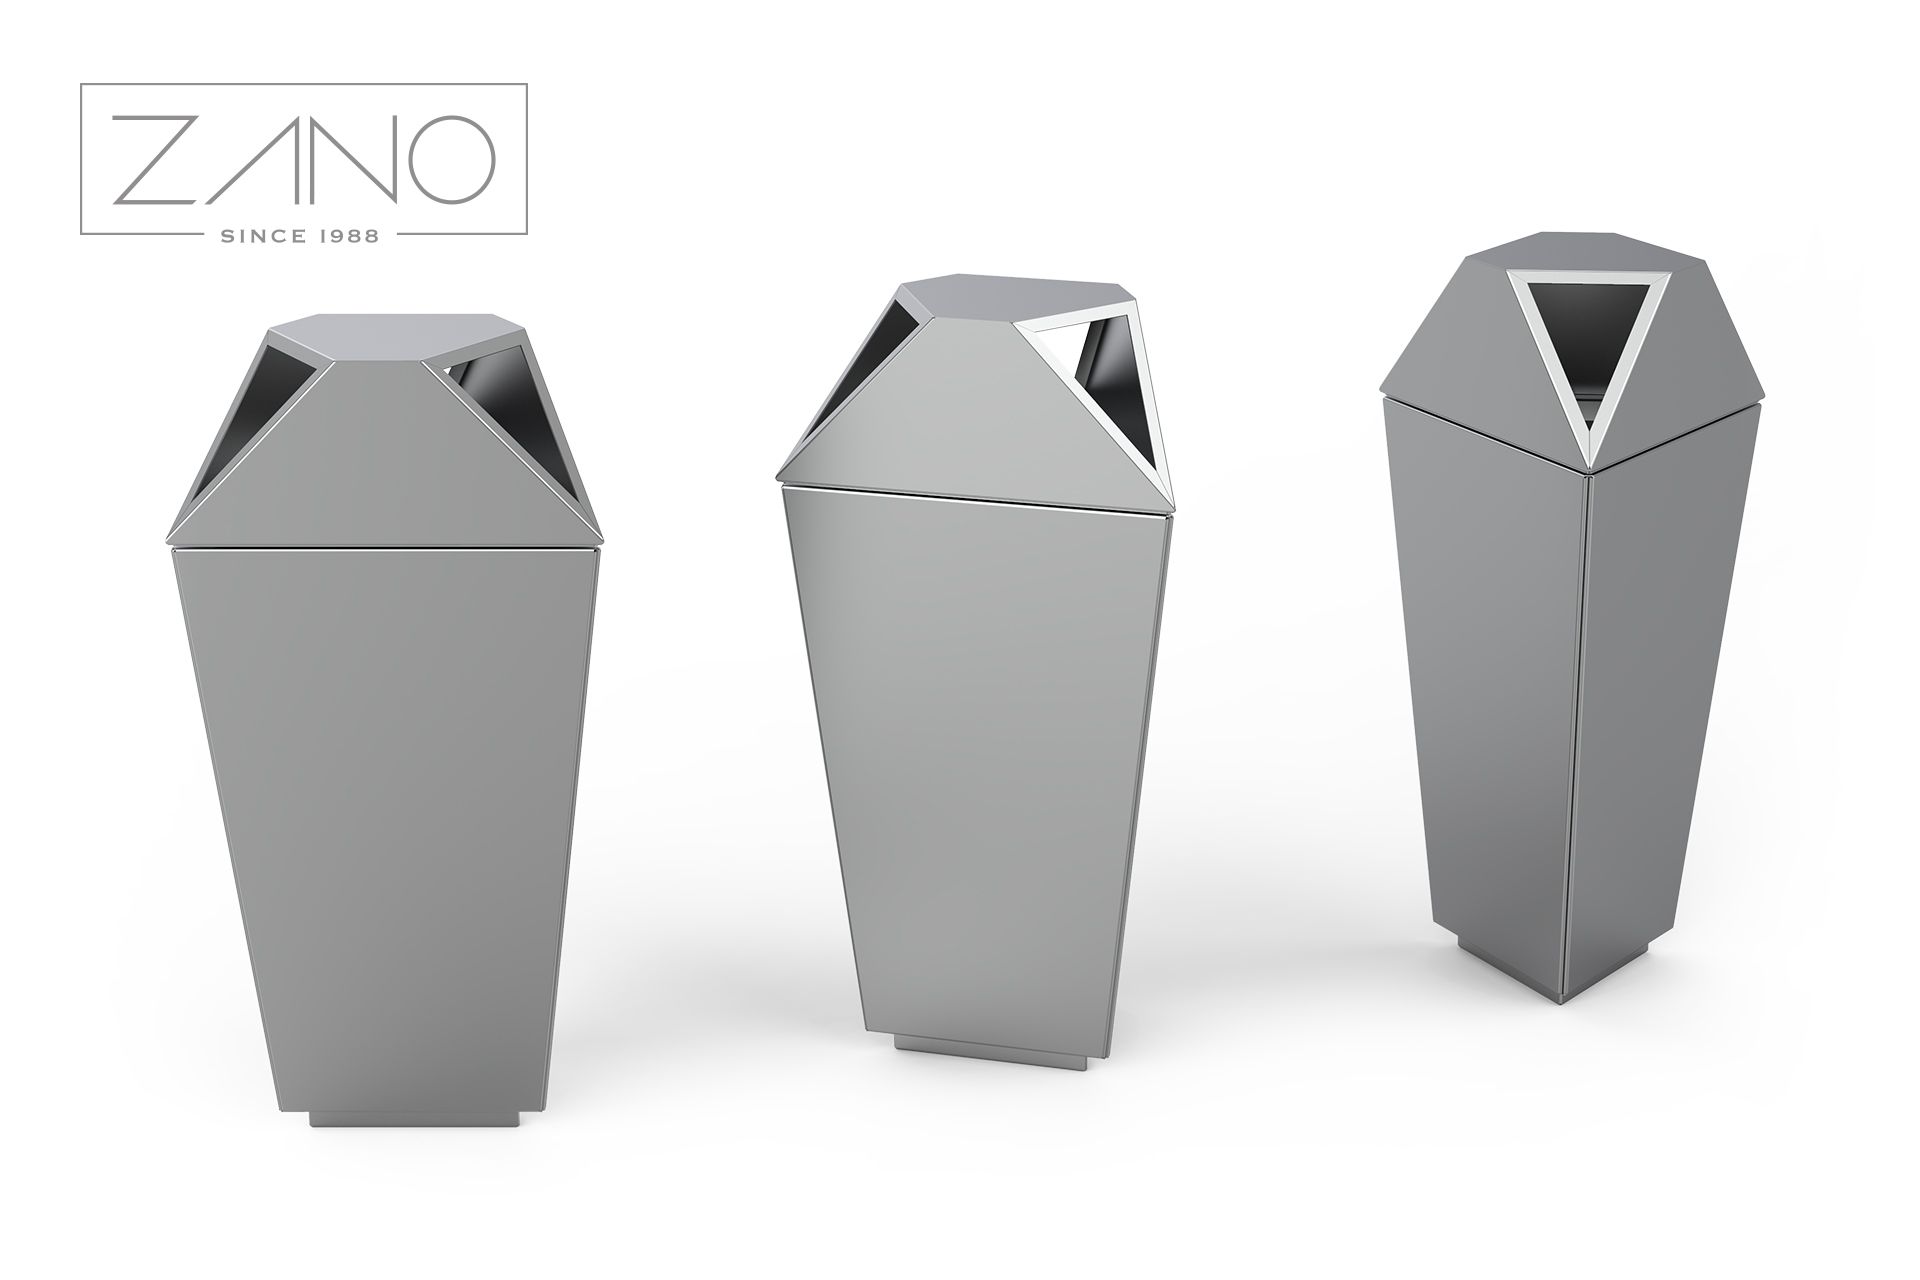 Litter bin IVO made of stainless steel | ZANO Street furniture